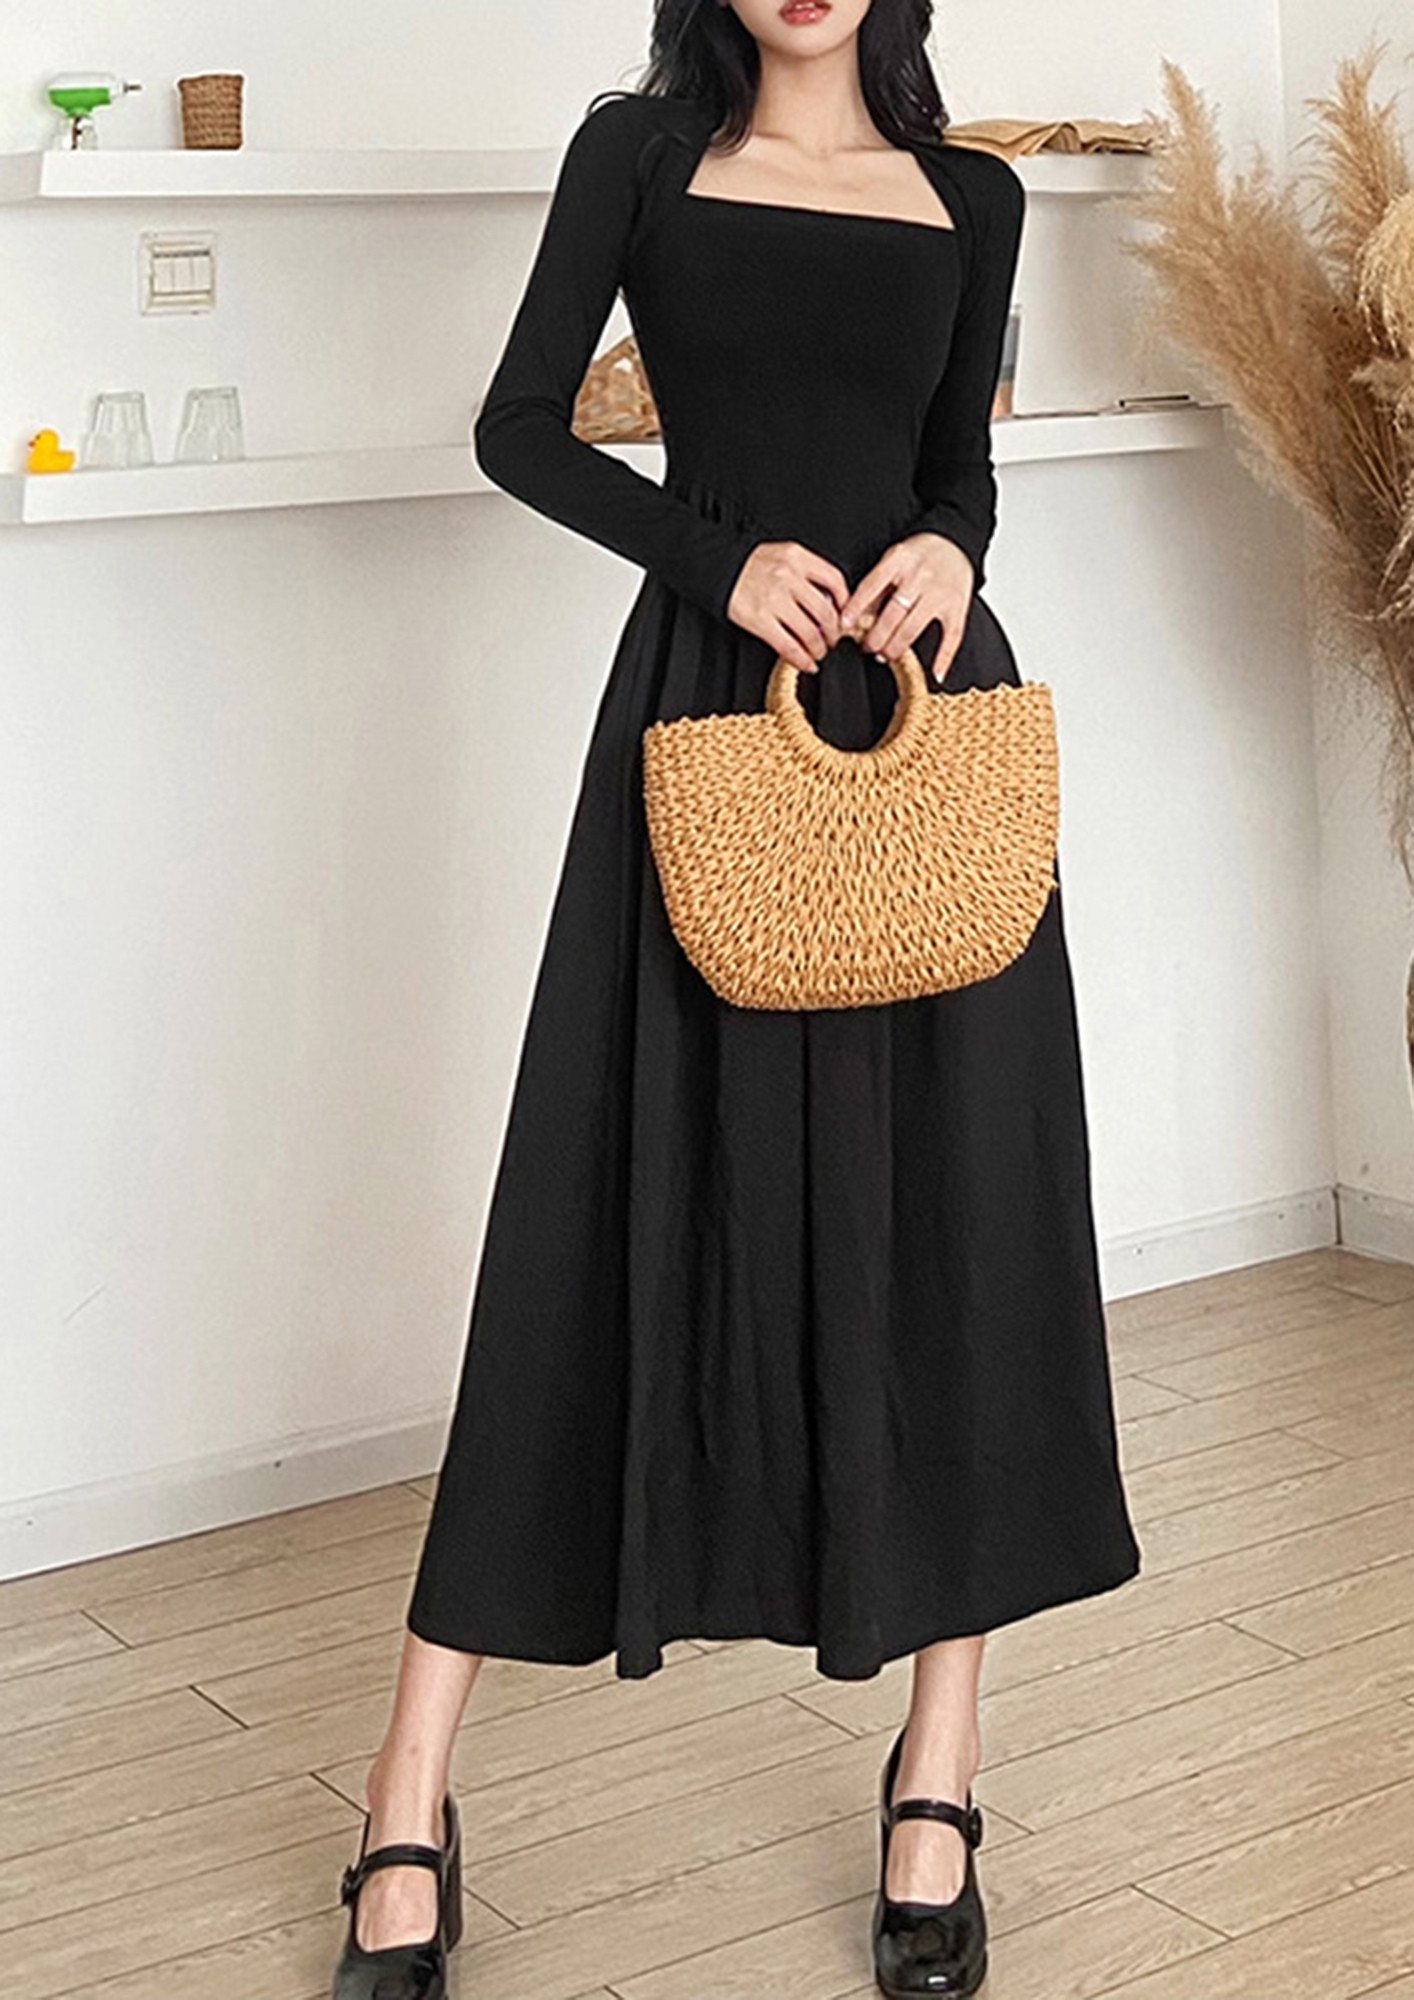 Buy MIRABI Women Black Solid Full Sleeve Dress (X-Small) at Amazon.in